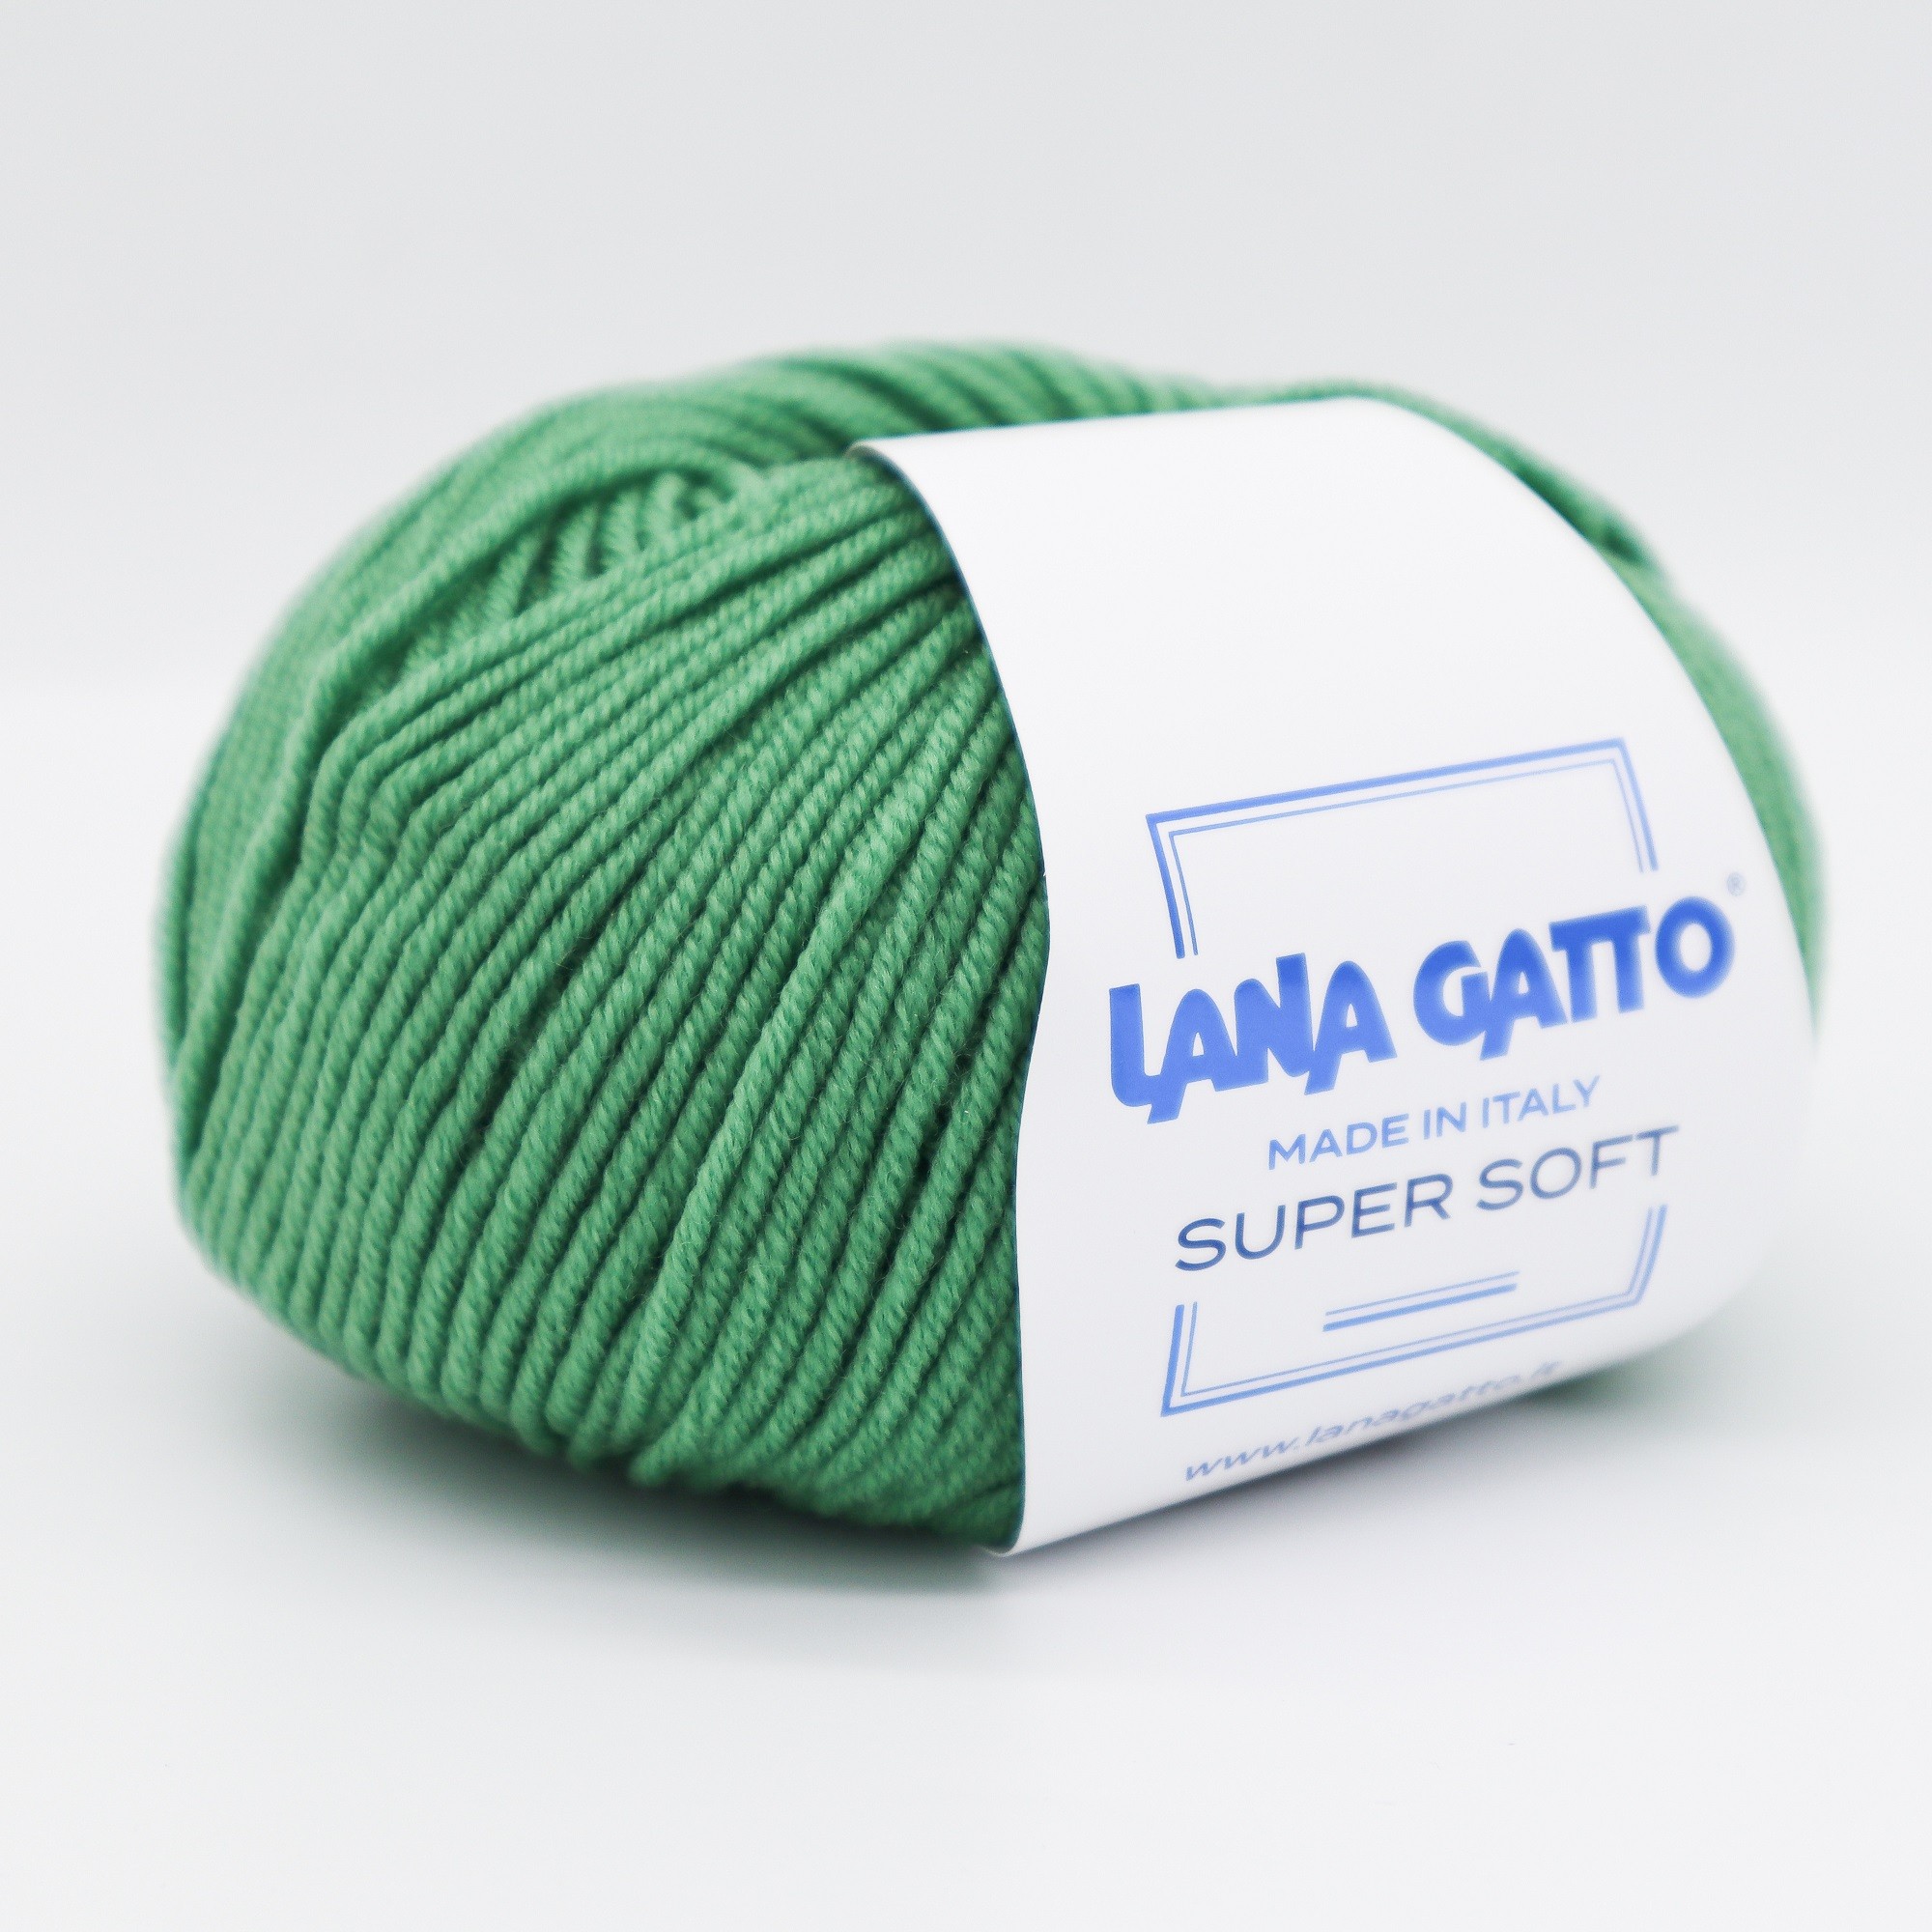 Lana gatto. Lana gatto super Soft цвет 14602.